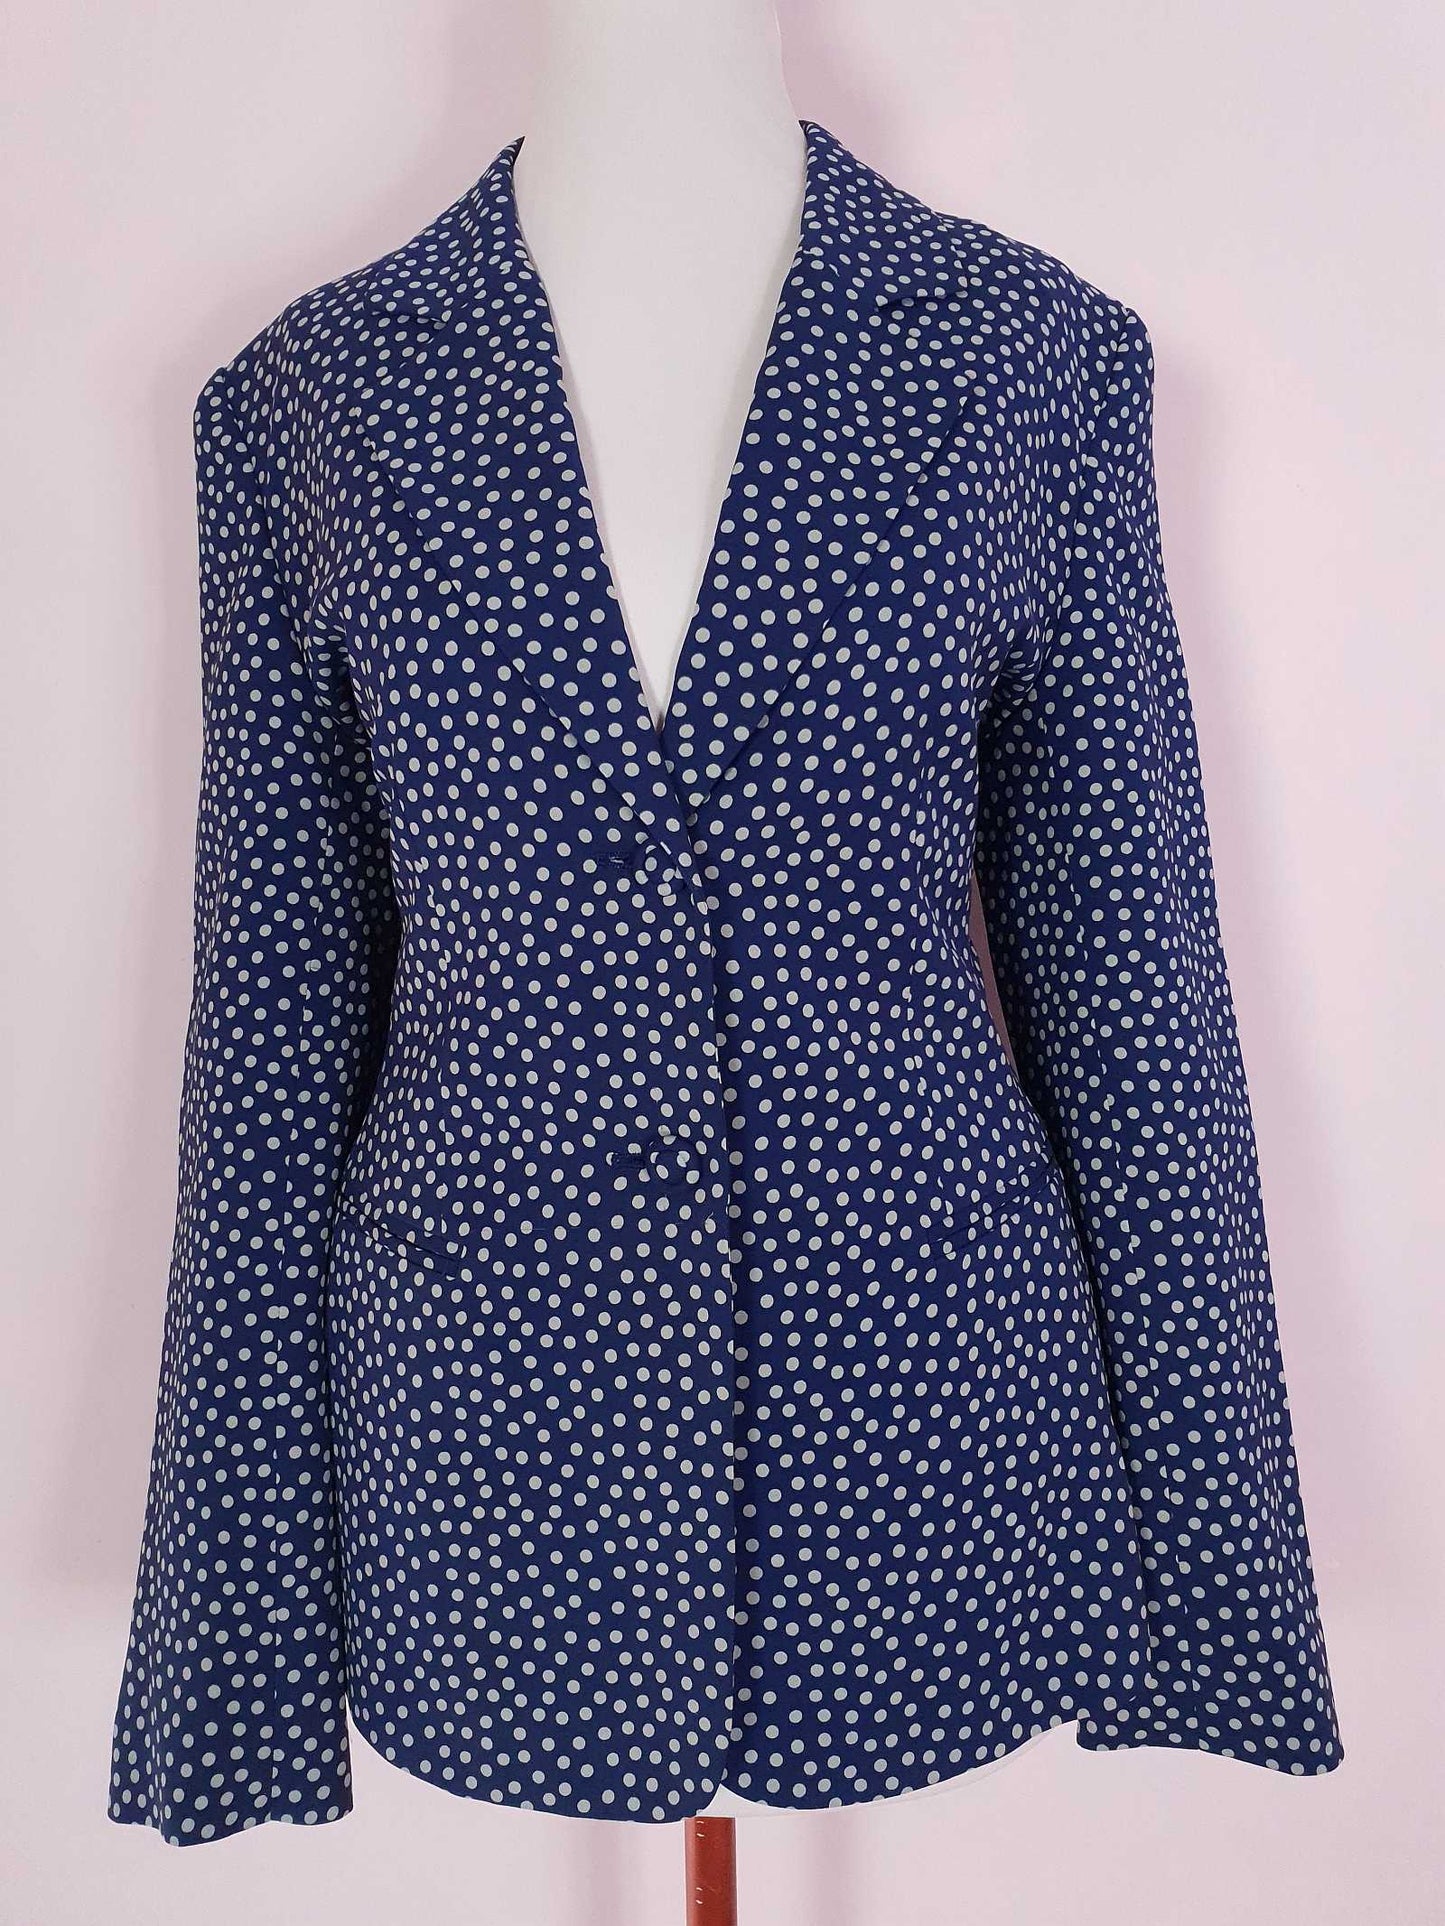 Vintage 90s Navy Blue Silk Blazer Jacket Size 10 Polka Dot Jasper Conran